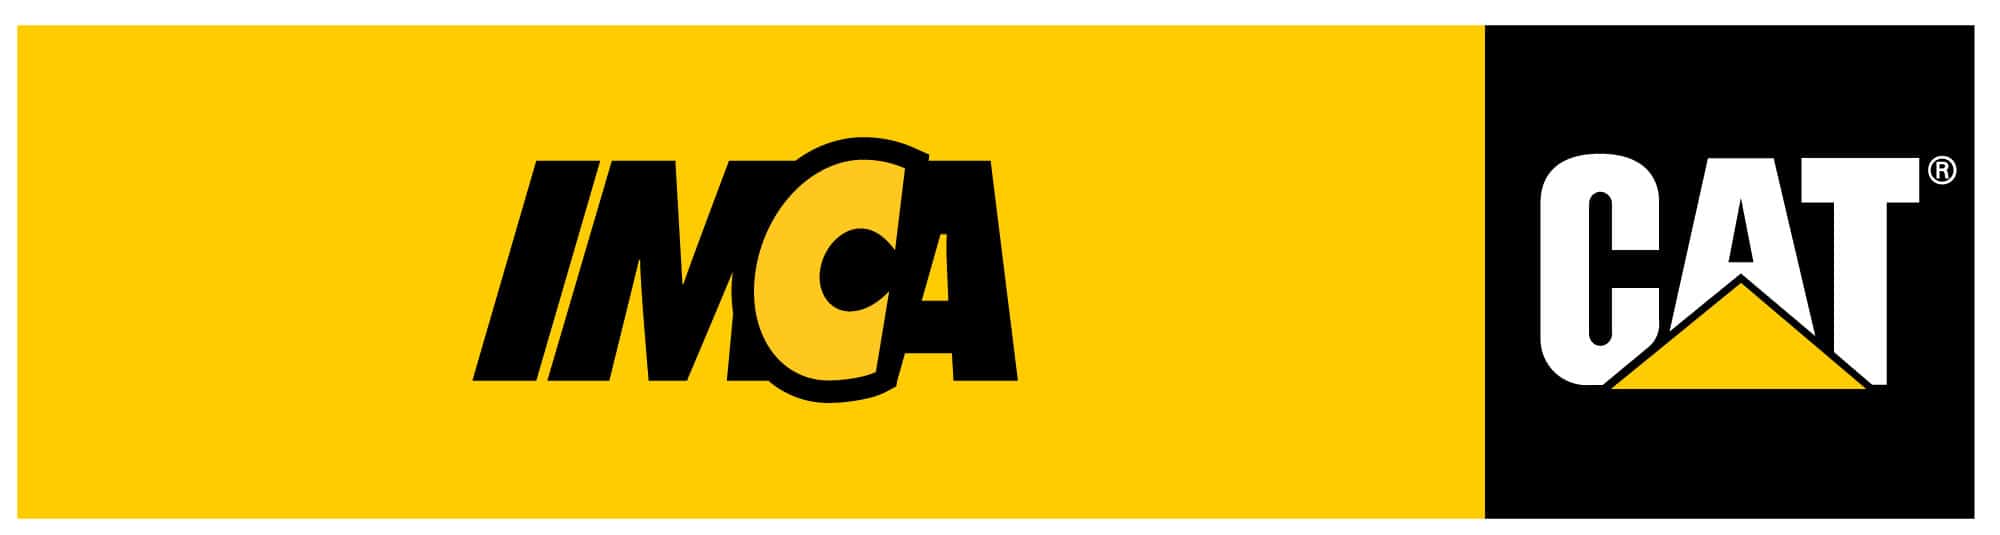 IMCA logo